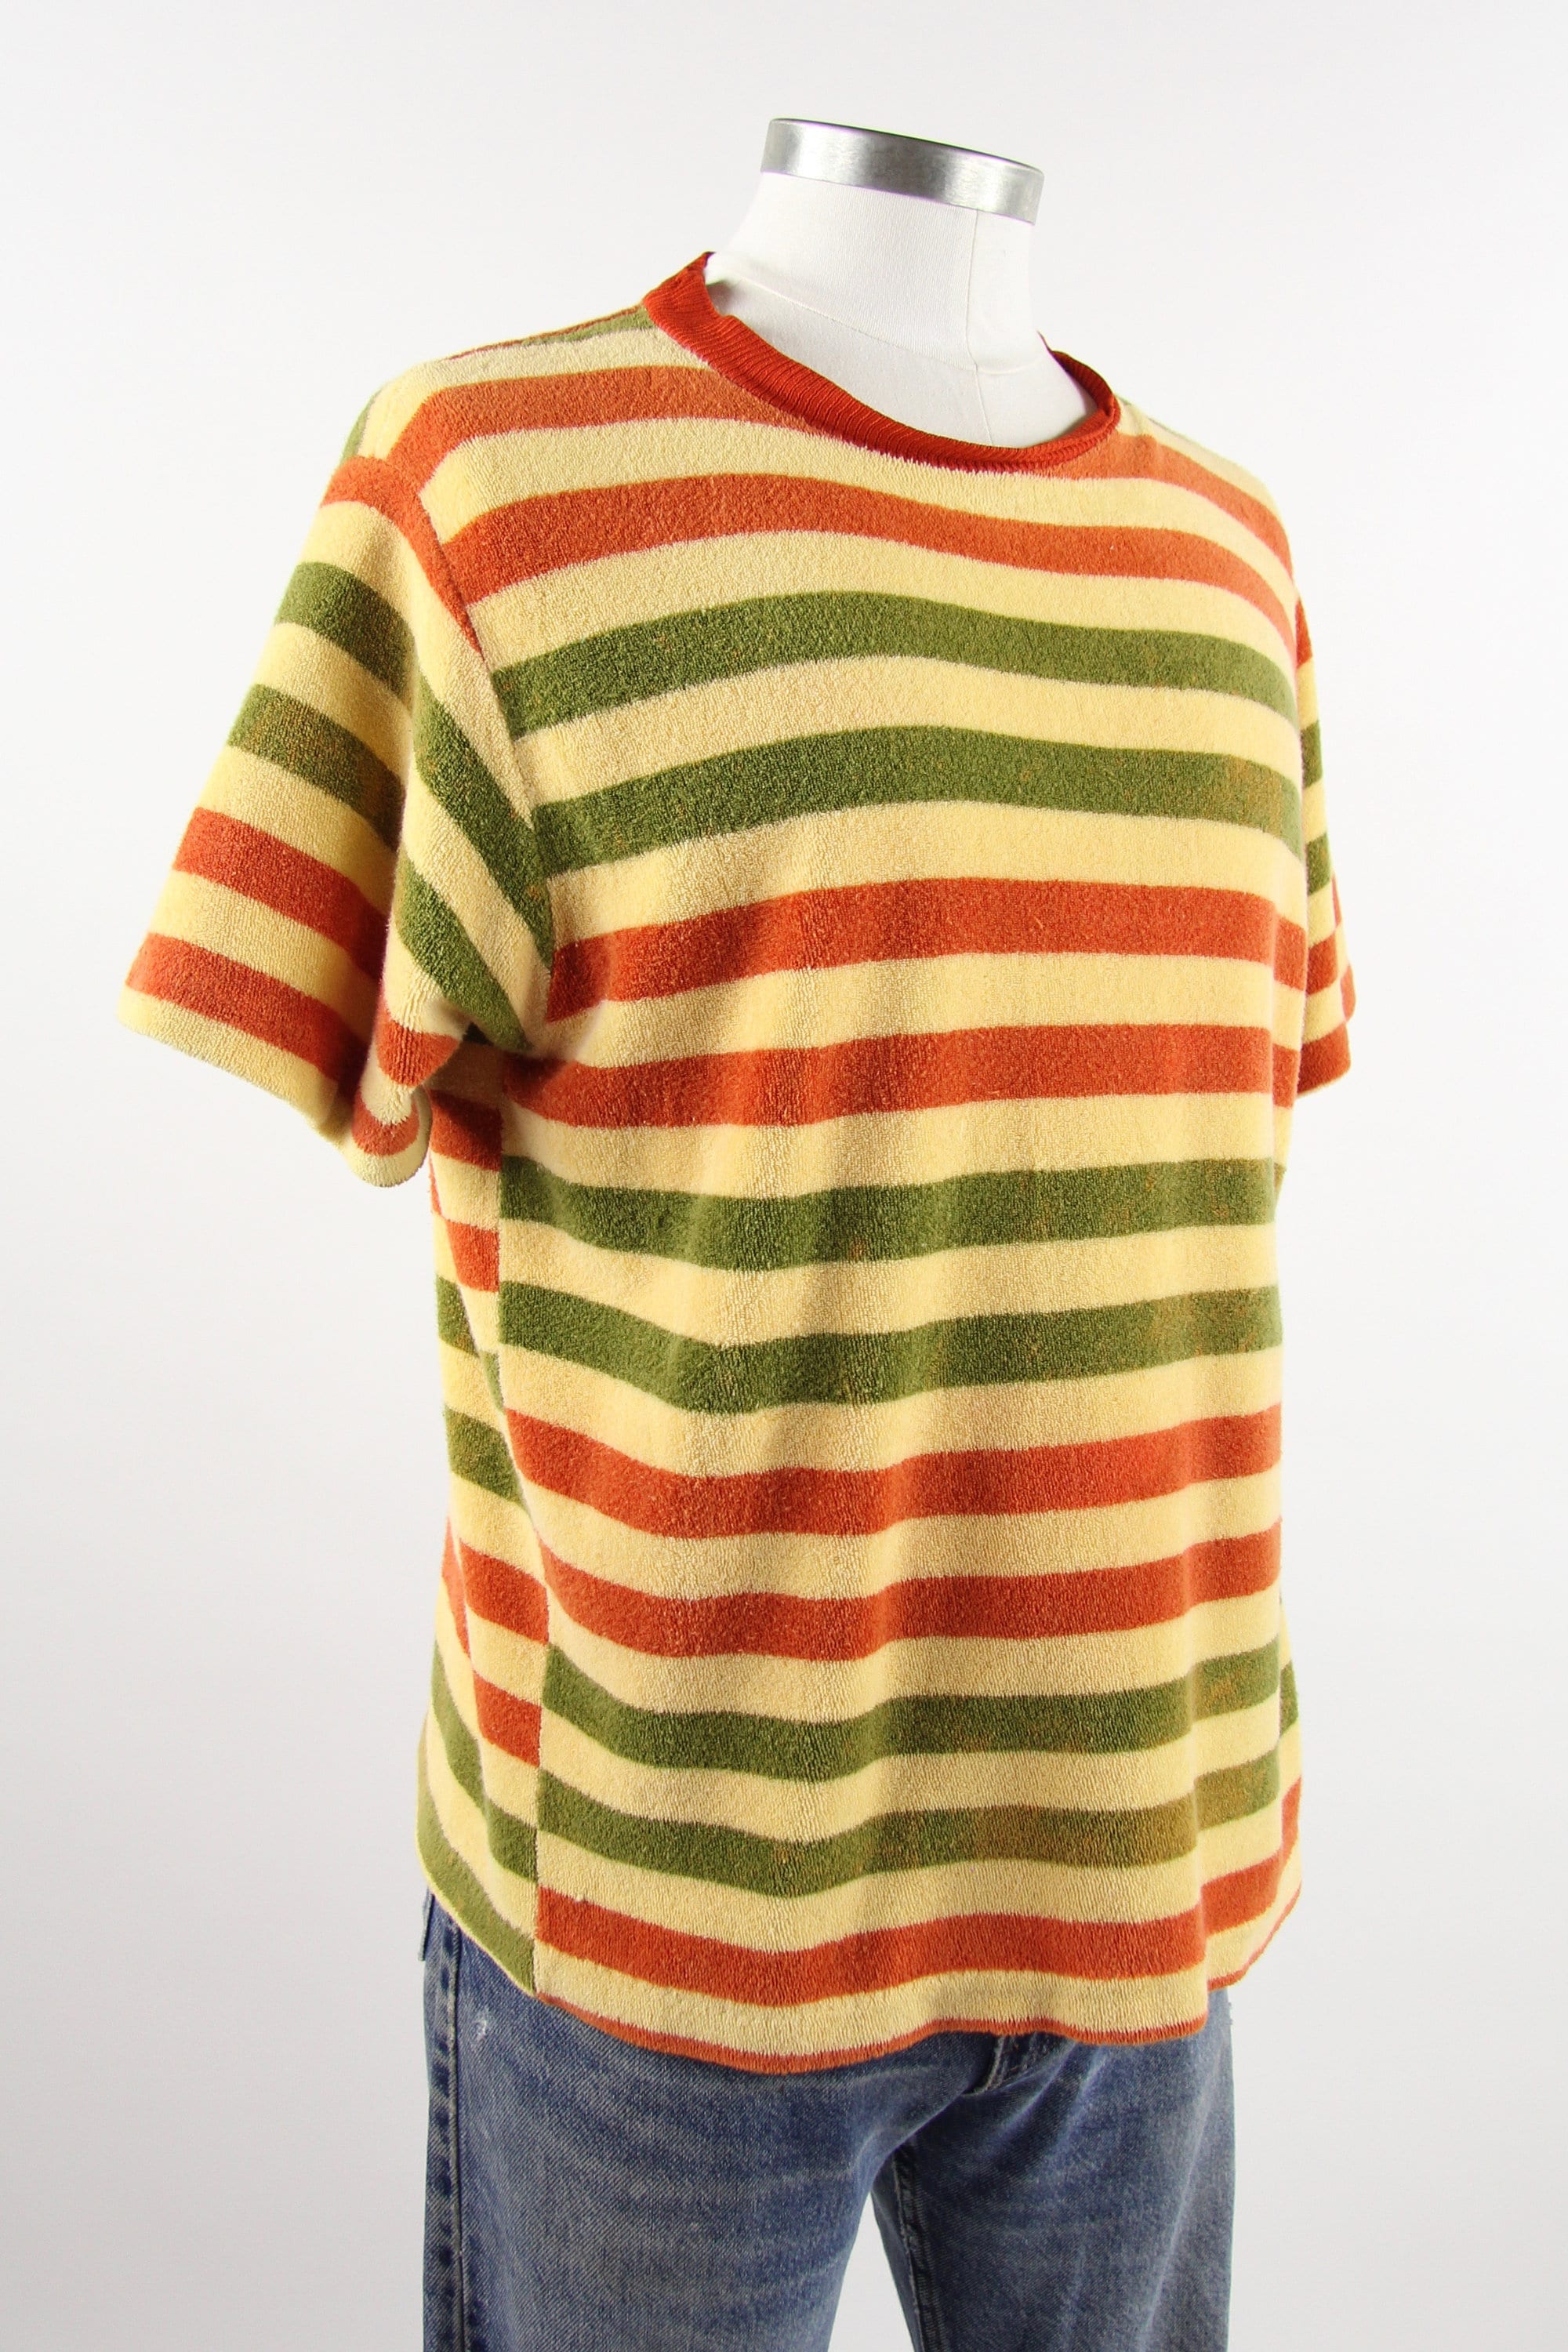 60's Striped Shirt Yellow Terry Cloth T-shirt Size Medium